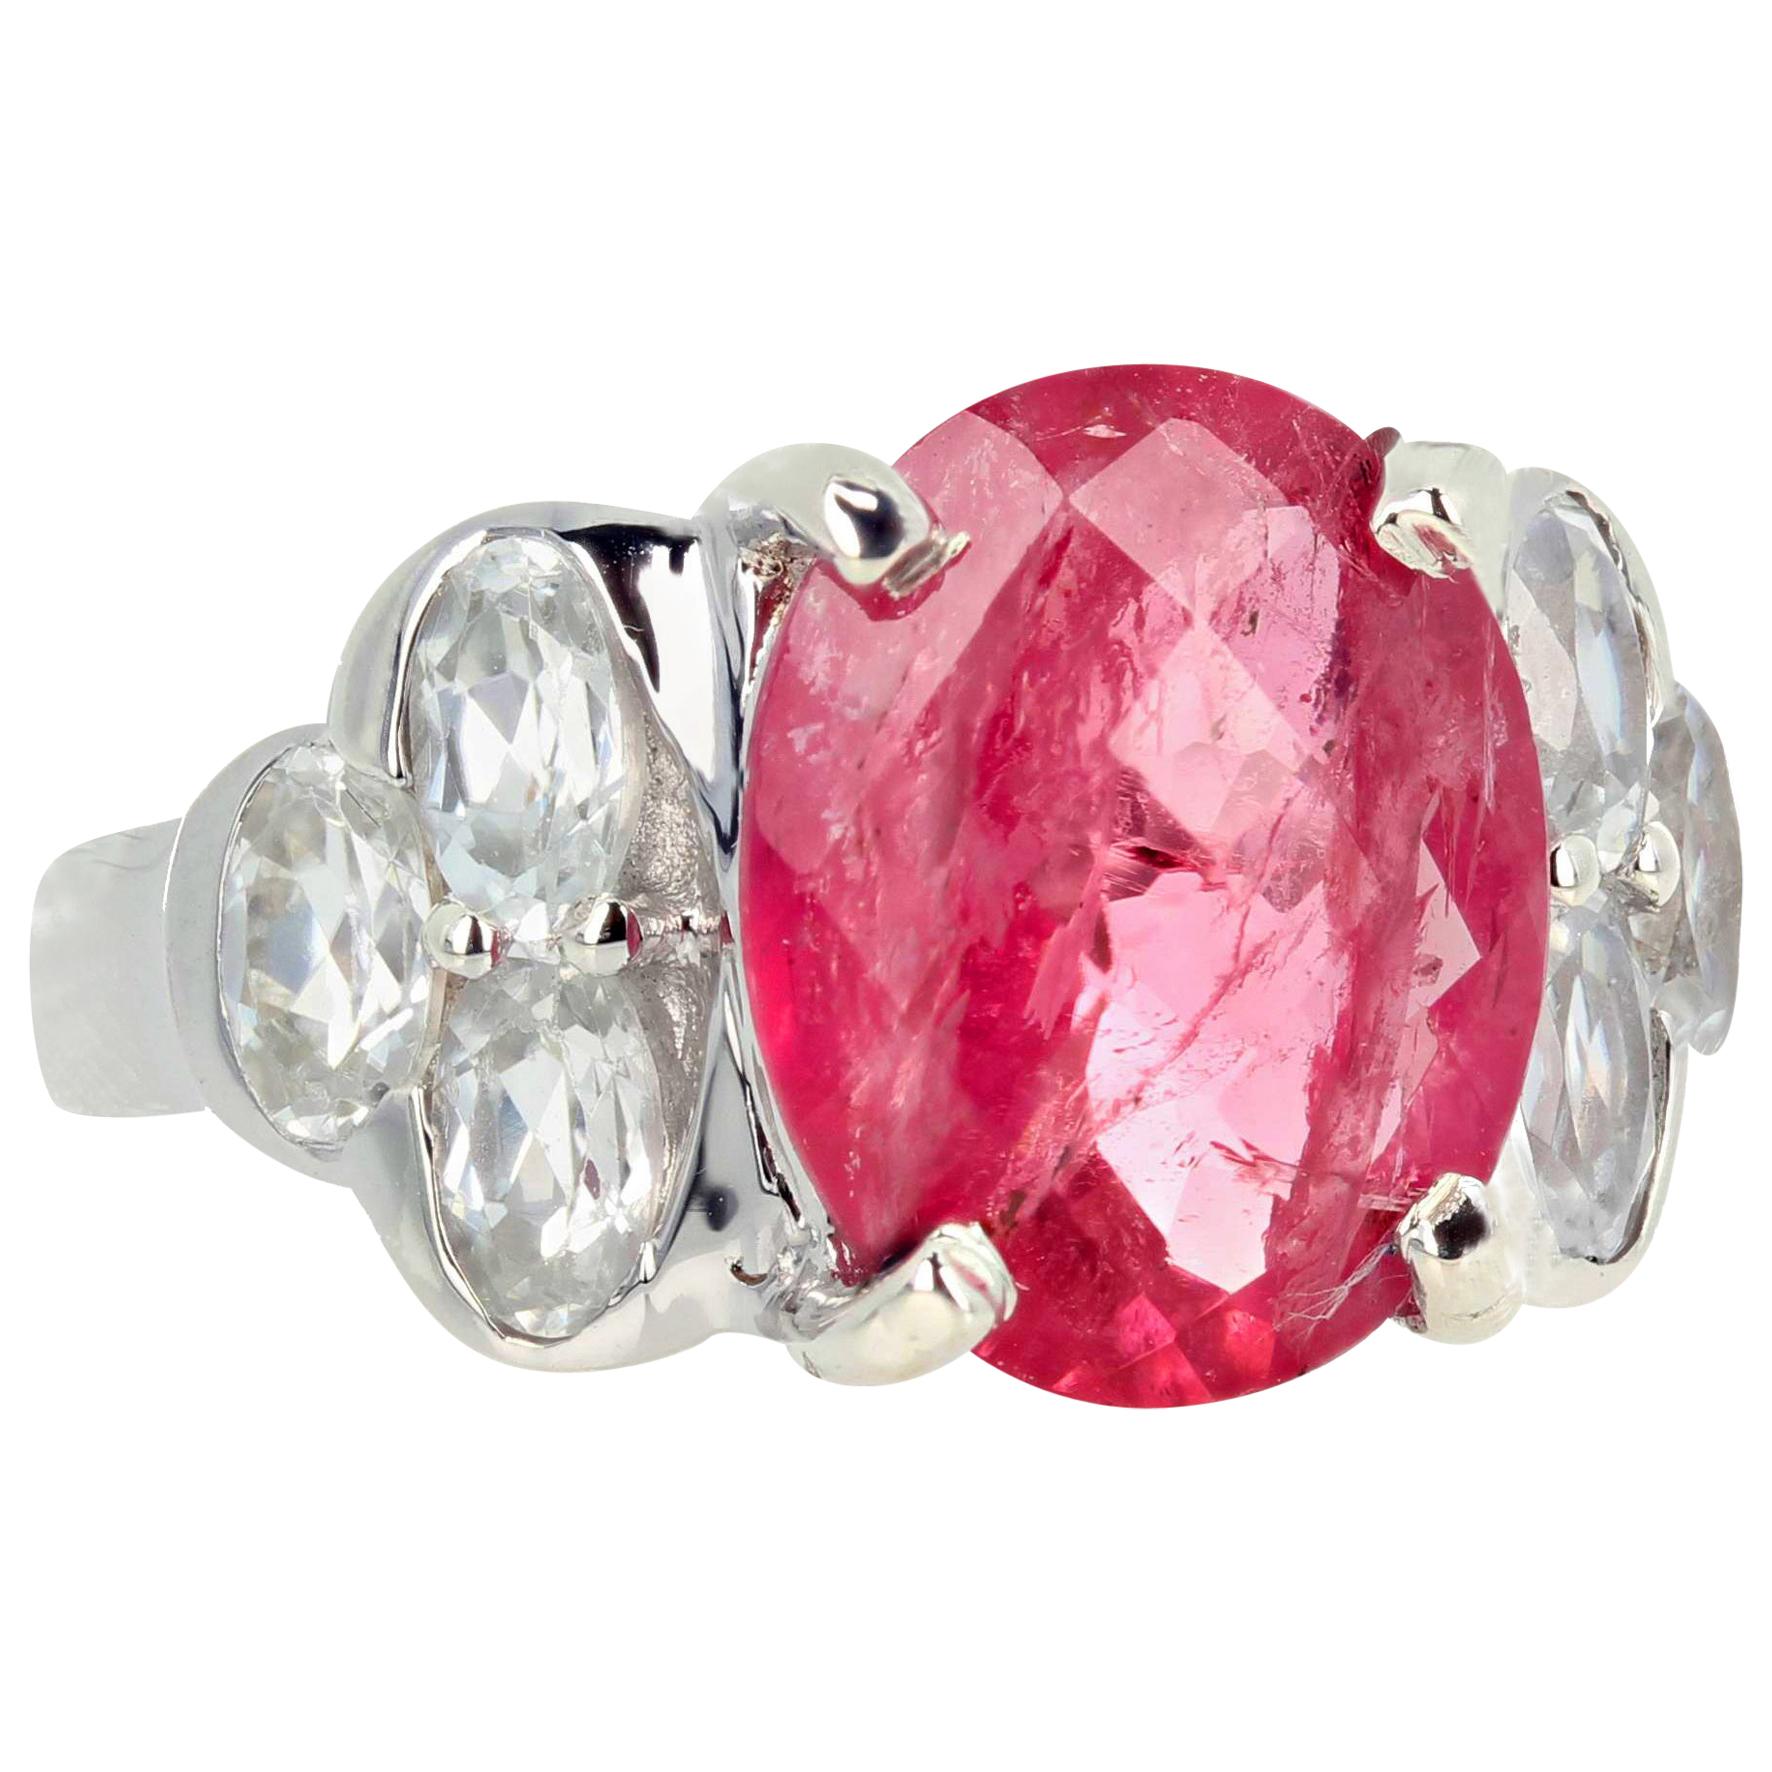 AJD Beautiful Bright 5.08Ct Pink Tourmaline & White Topaz Ring 